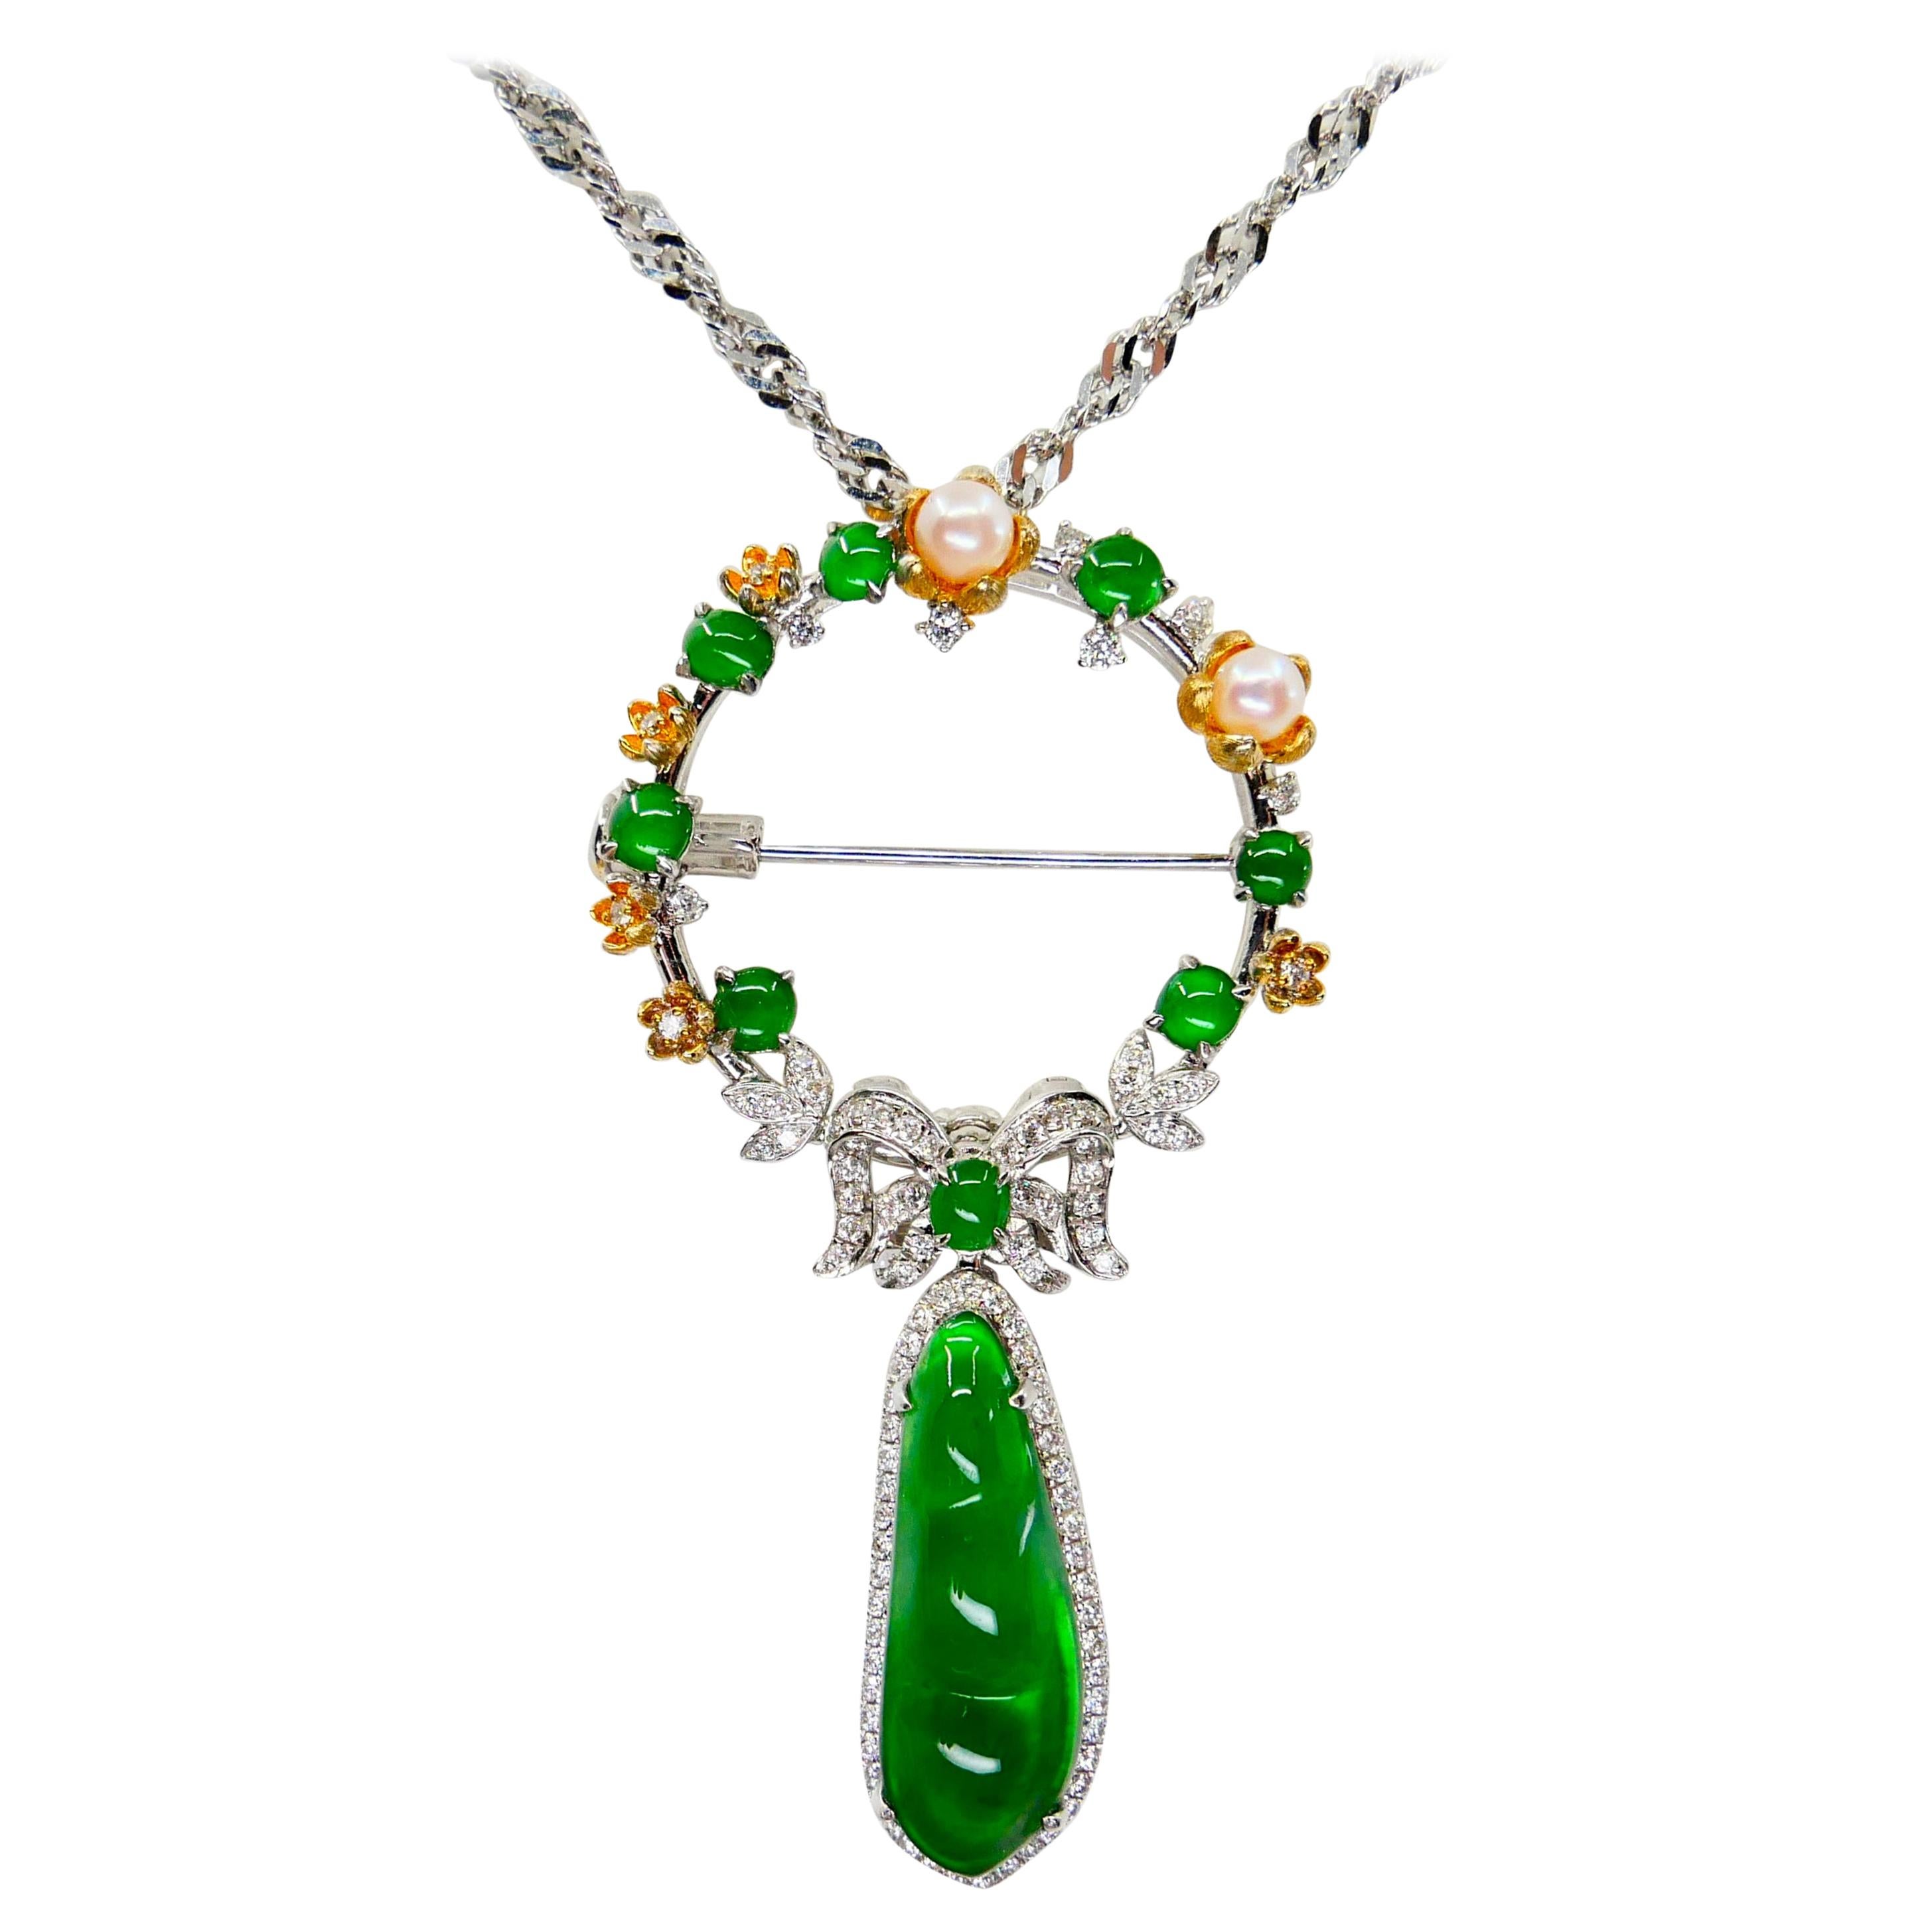 Certified Imperial Jade, Pearl, Diamond Pendant / Brooch, Wear 5 Different Ways